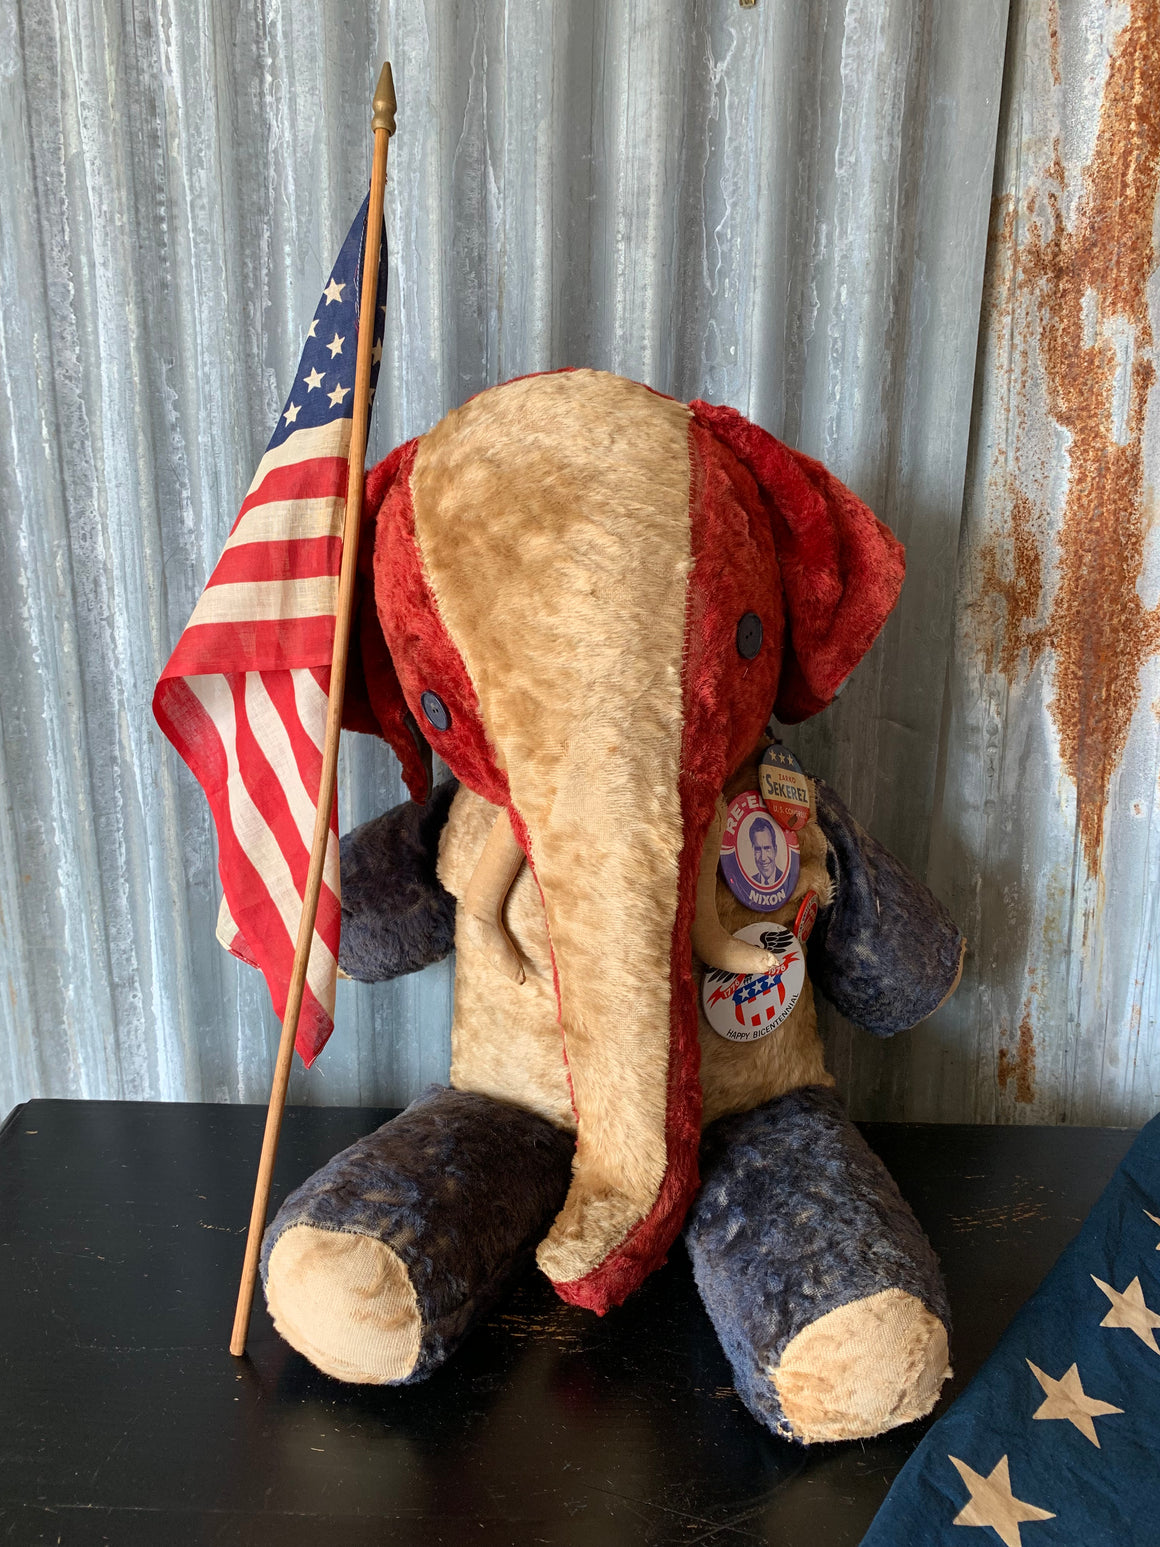 A straw filled Republican elephant mascot